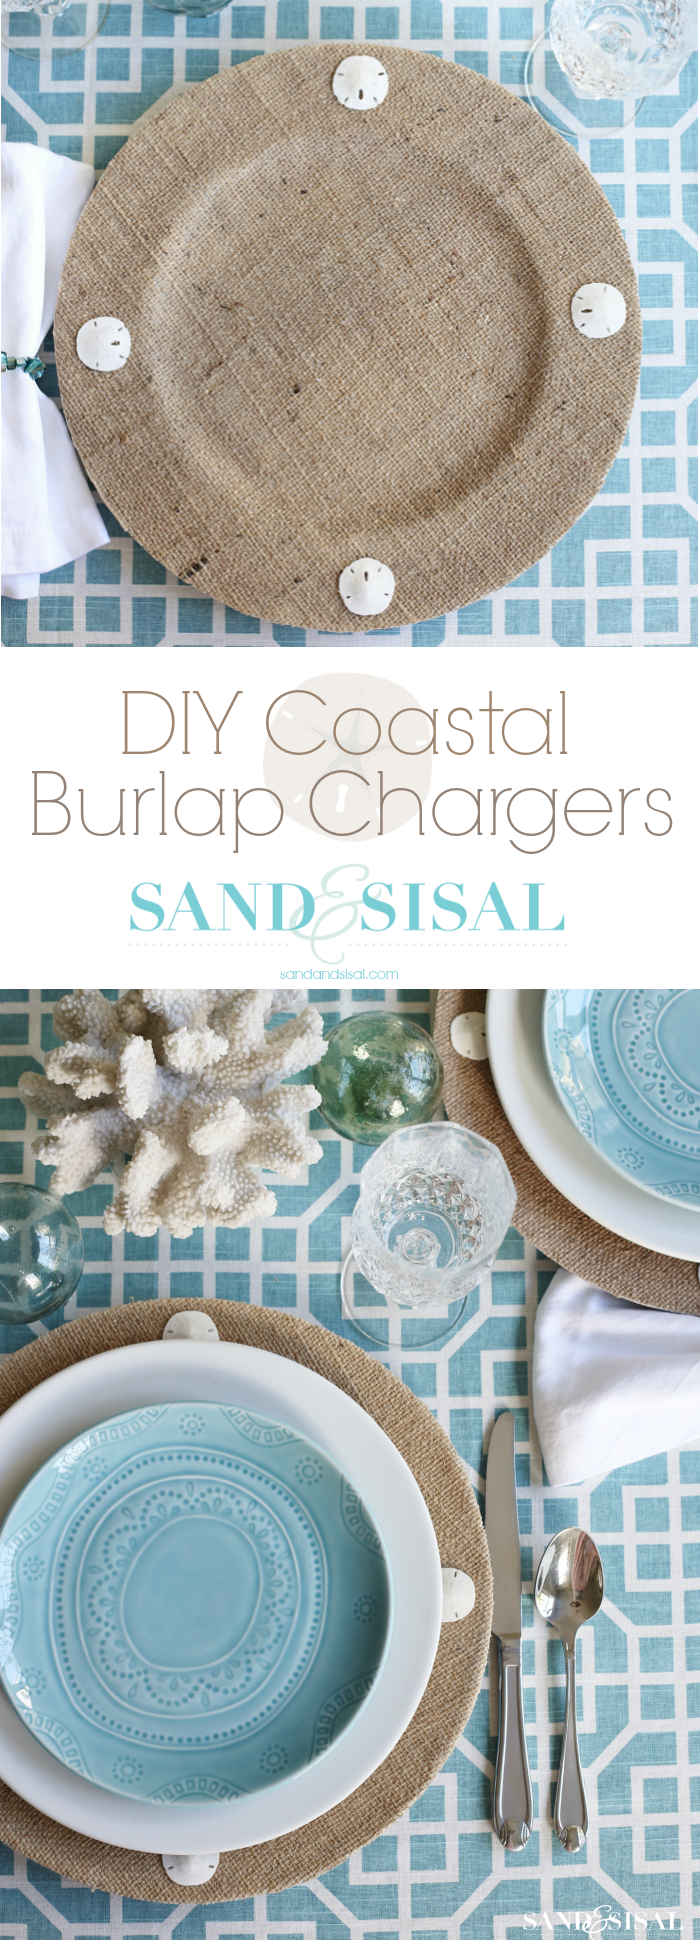 diy-coastal-burlap-chargers-sandandsisal-com